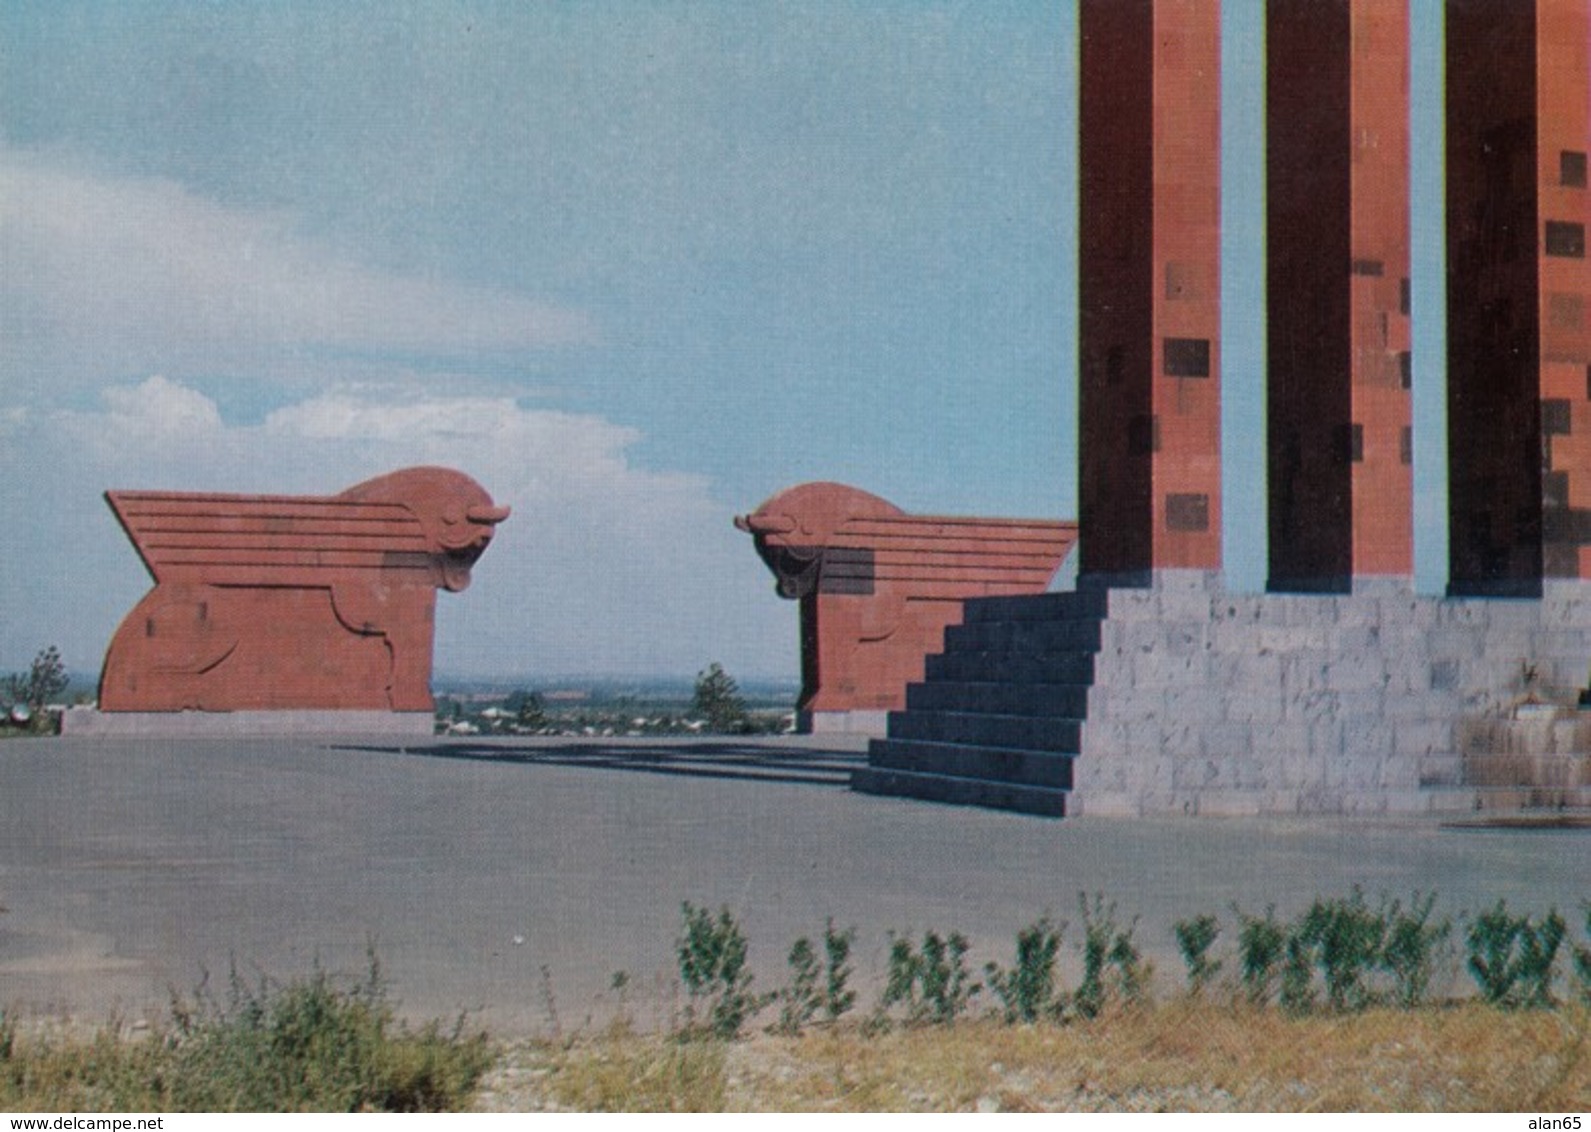 Armenia, Octemberyan Architecture And Monuments, Soviet-era Issued C1970s Vintage Postcard - Armenia